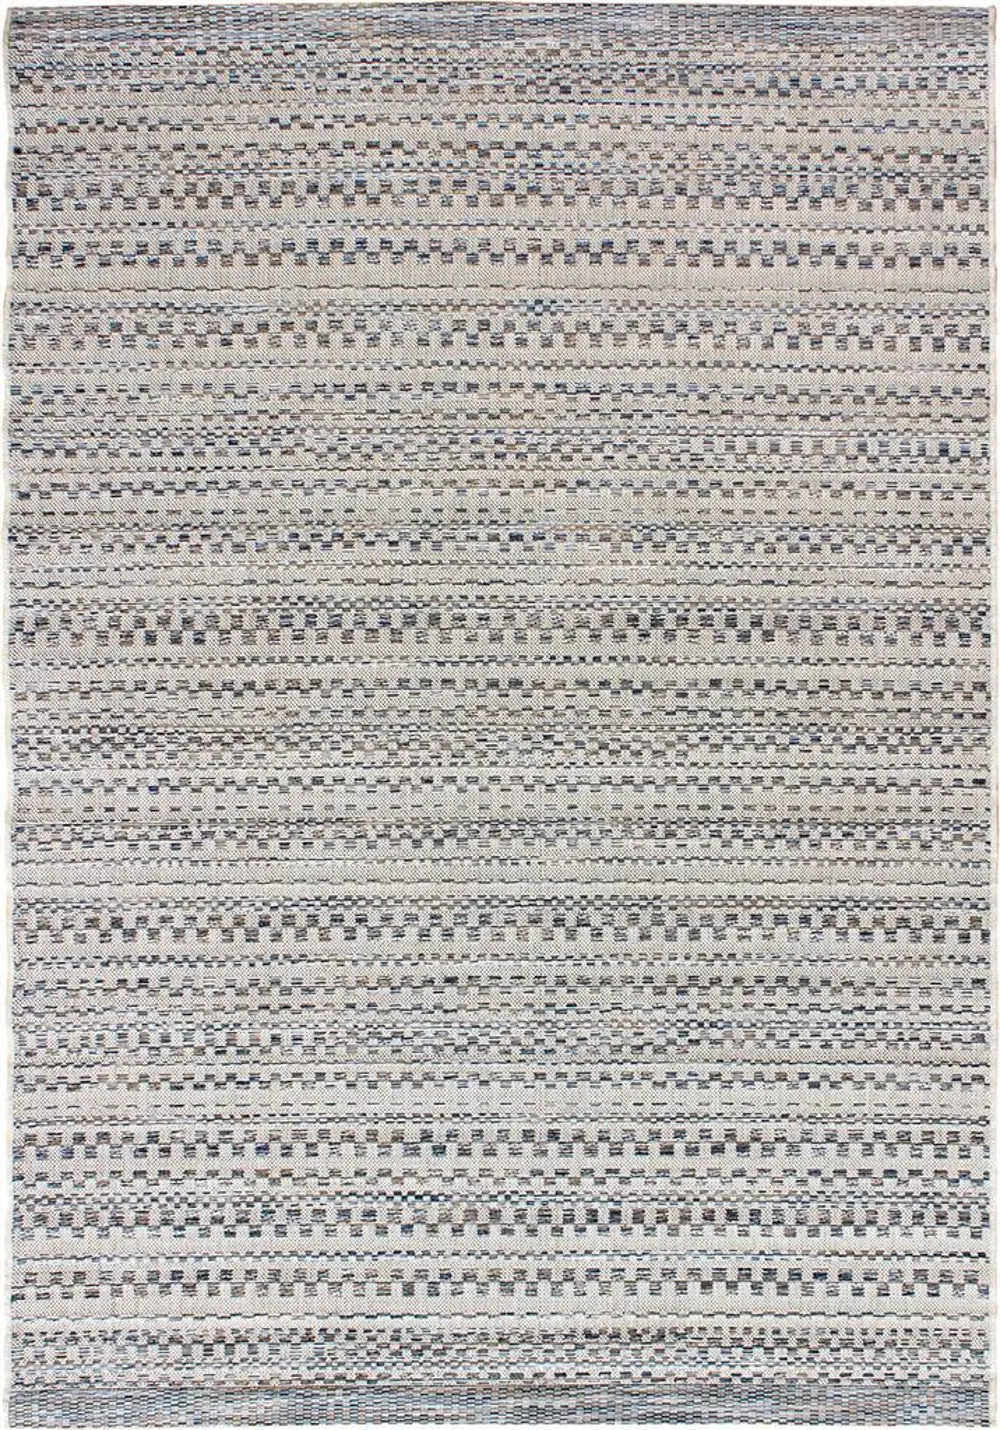 BREEZE/4004...2 5 x 8 Medium Aegean Gray, Blue, White, and Ivory Indoor-Outdoor Rug - Breeze-1